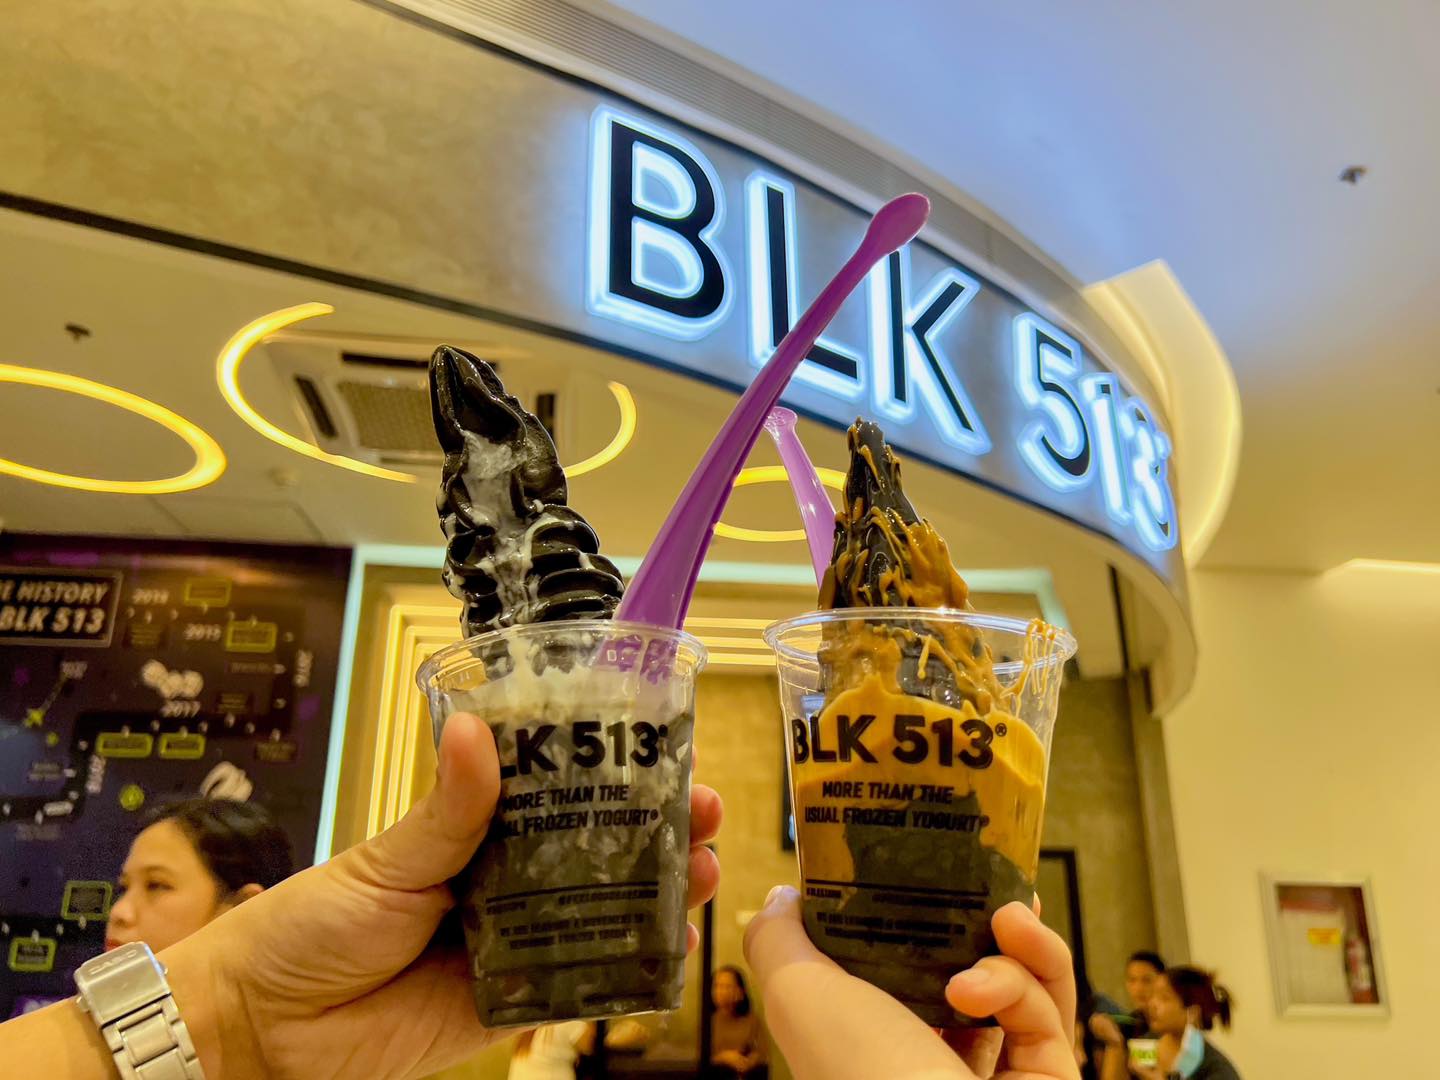 Gateway Mall 2 embraces tasty dark side with BLK 513